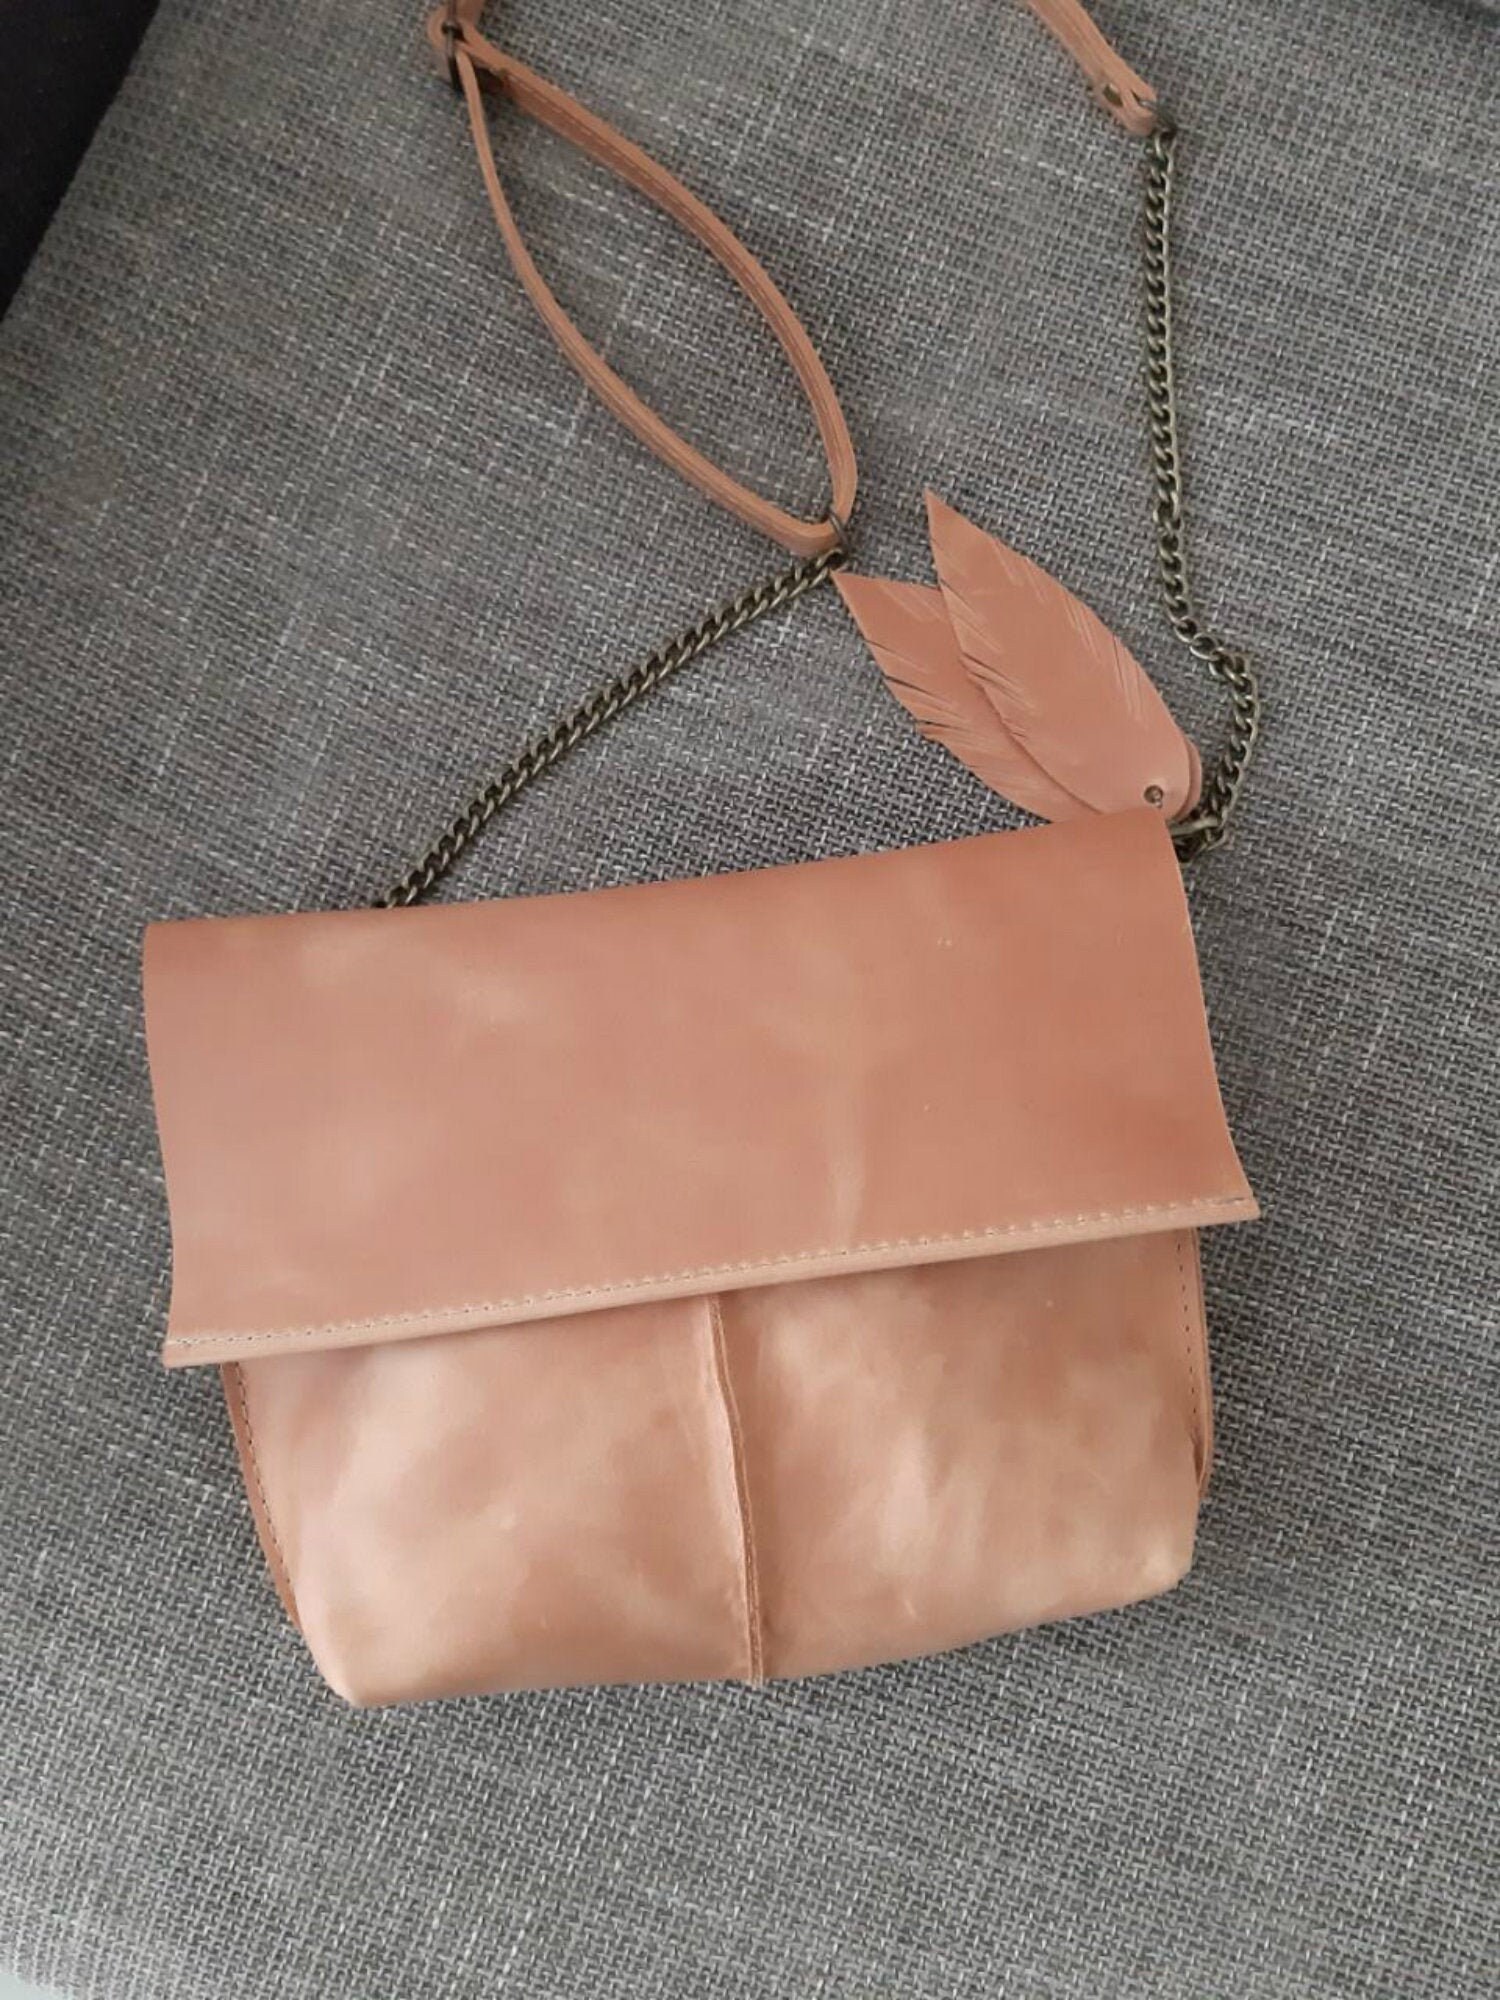 Caramel Leather shoulder bag Pink Crossbody Bag Small Handbag | Etsy